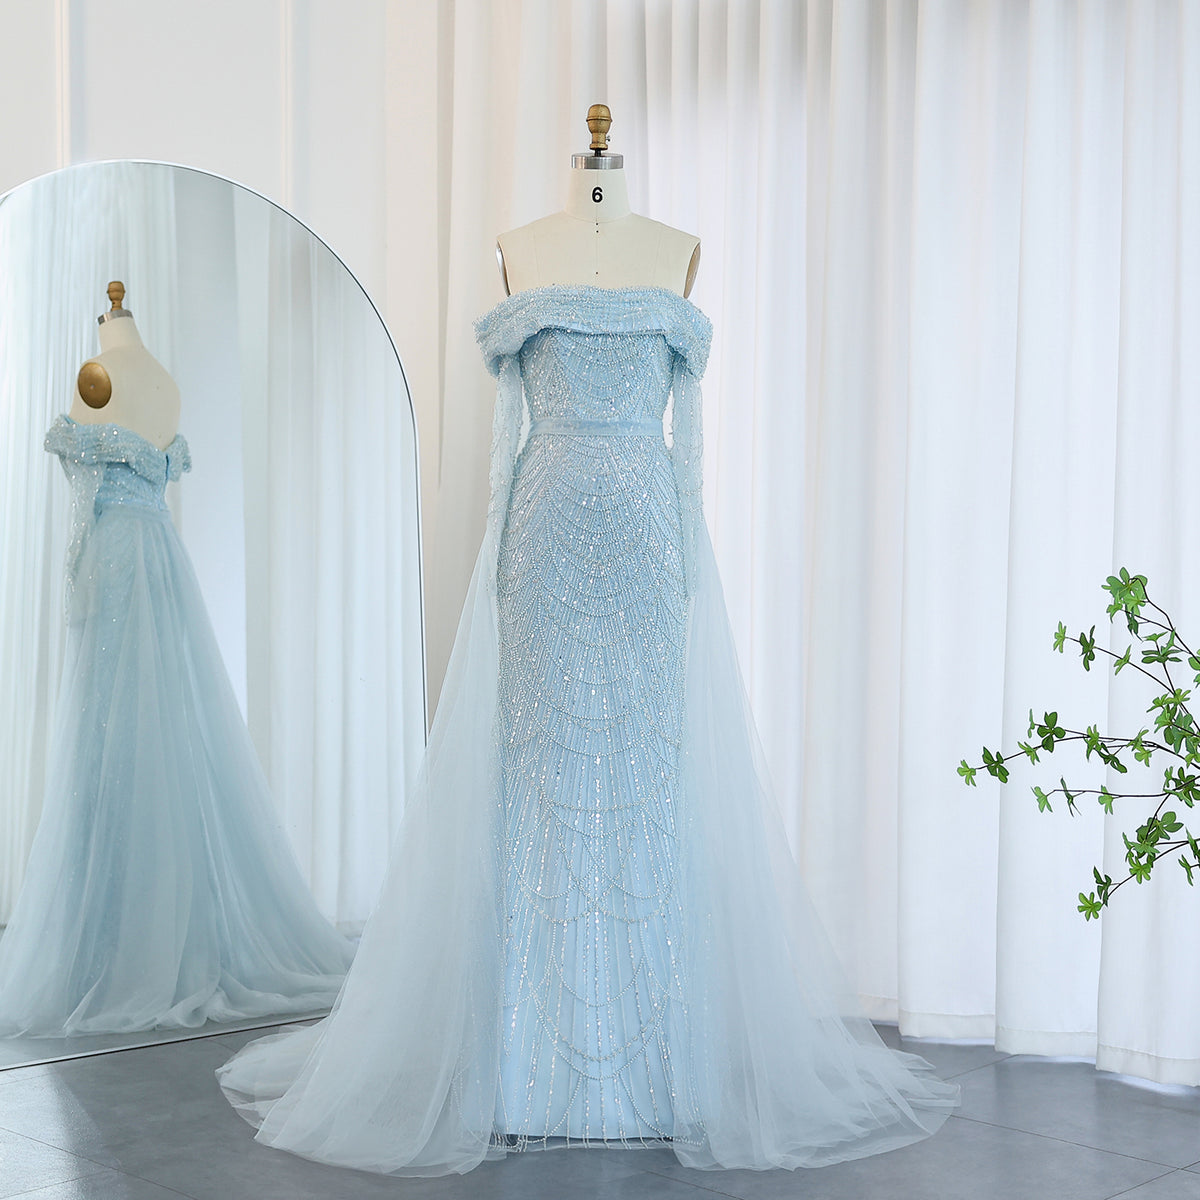 Sharon Said Luxury Off Shoulder Light Blue Mermaid Evening Dress with Detachable Overskirt Dubai Women Wedding Party Dress SS287